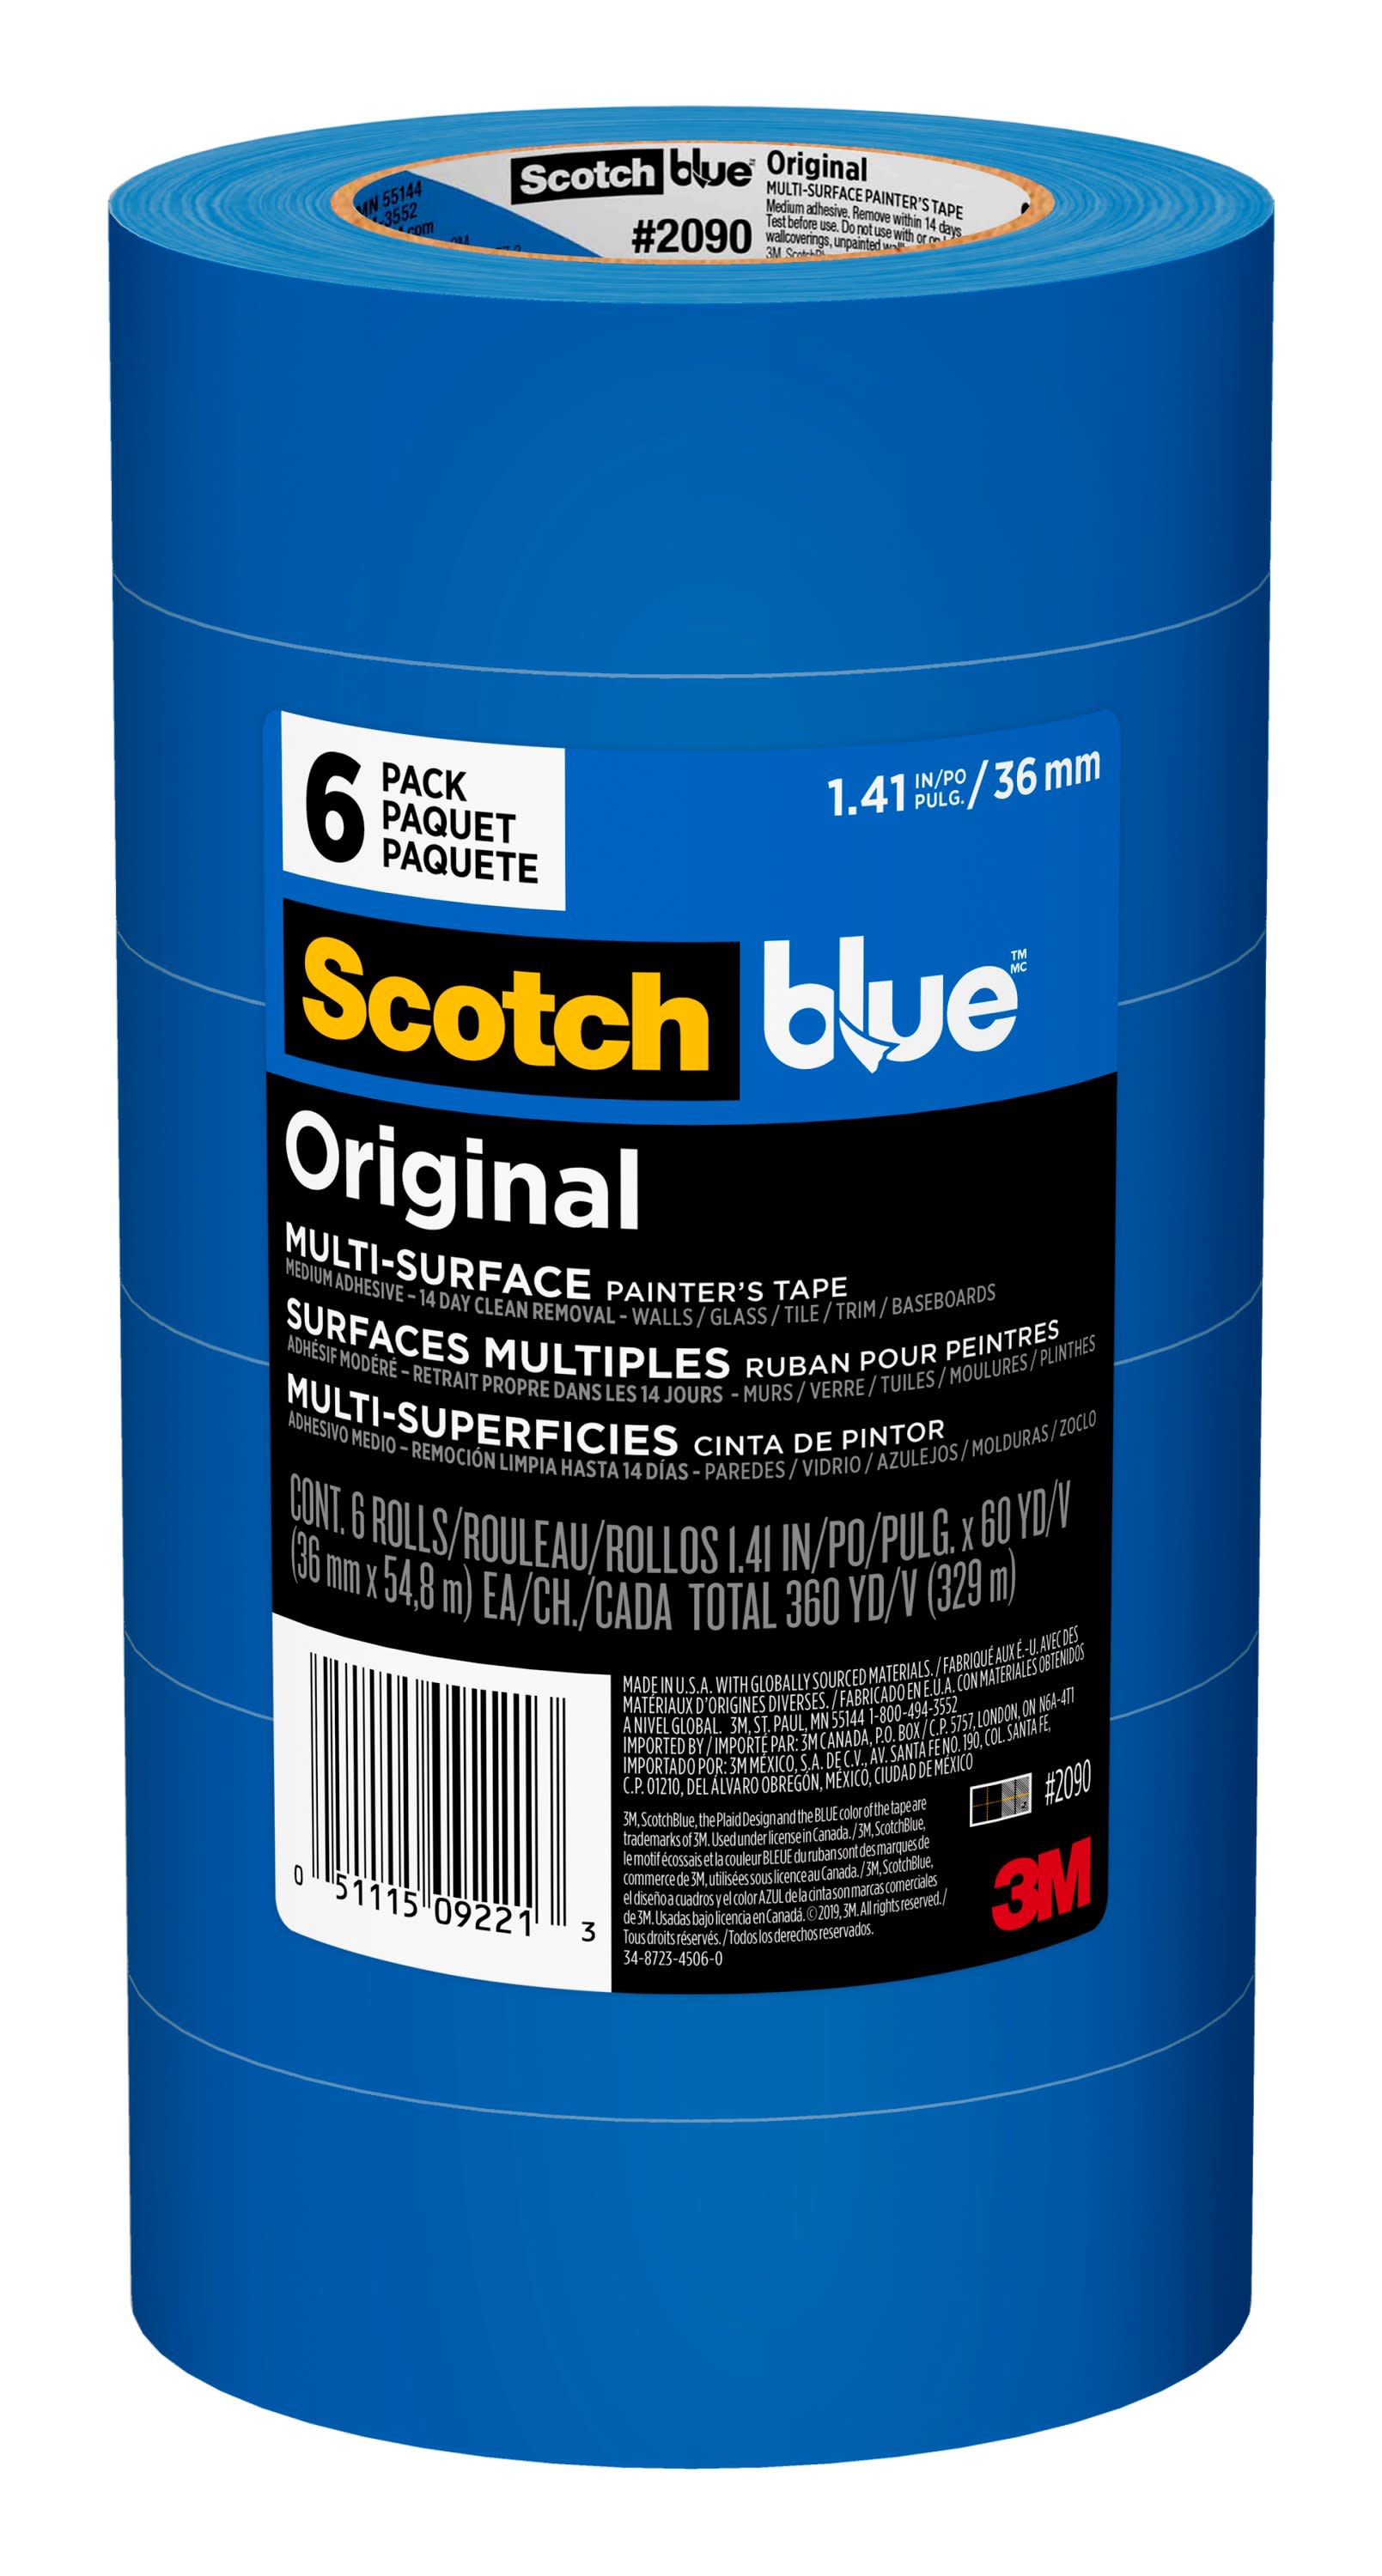 25-.75-1.5(1/4 3/4 1.5) x 60yd 6mm 18mm 36mm STIKK Blue Painters